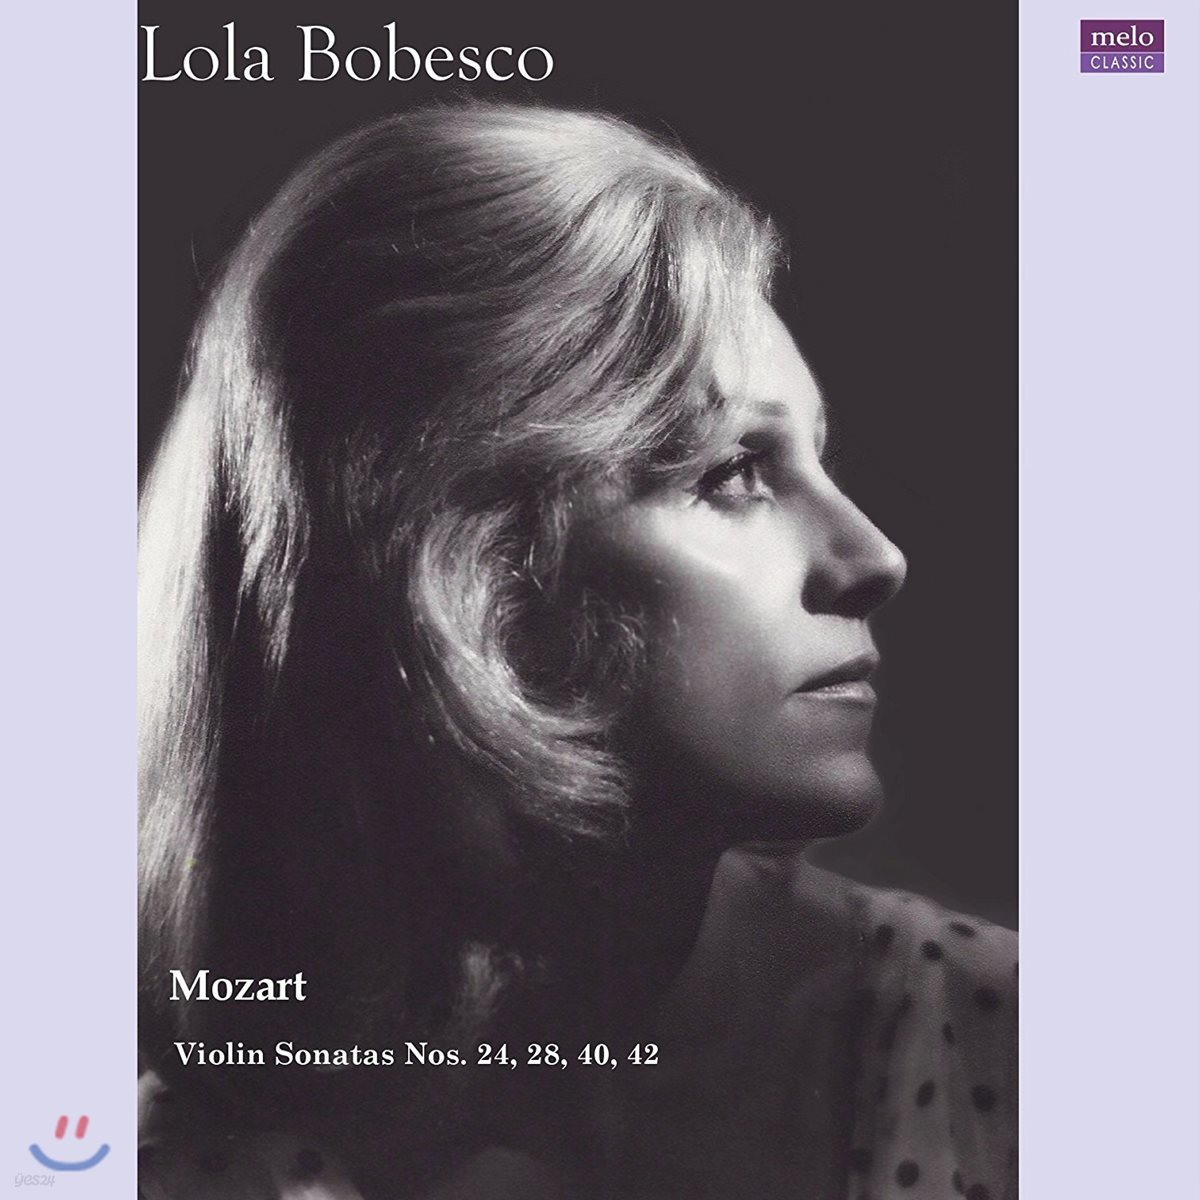 Lola Bobesco 모차르트: 바이올린 소나타 24, 28, 40, 42번 (Mozart: Violin Sonatas) [2LP]